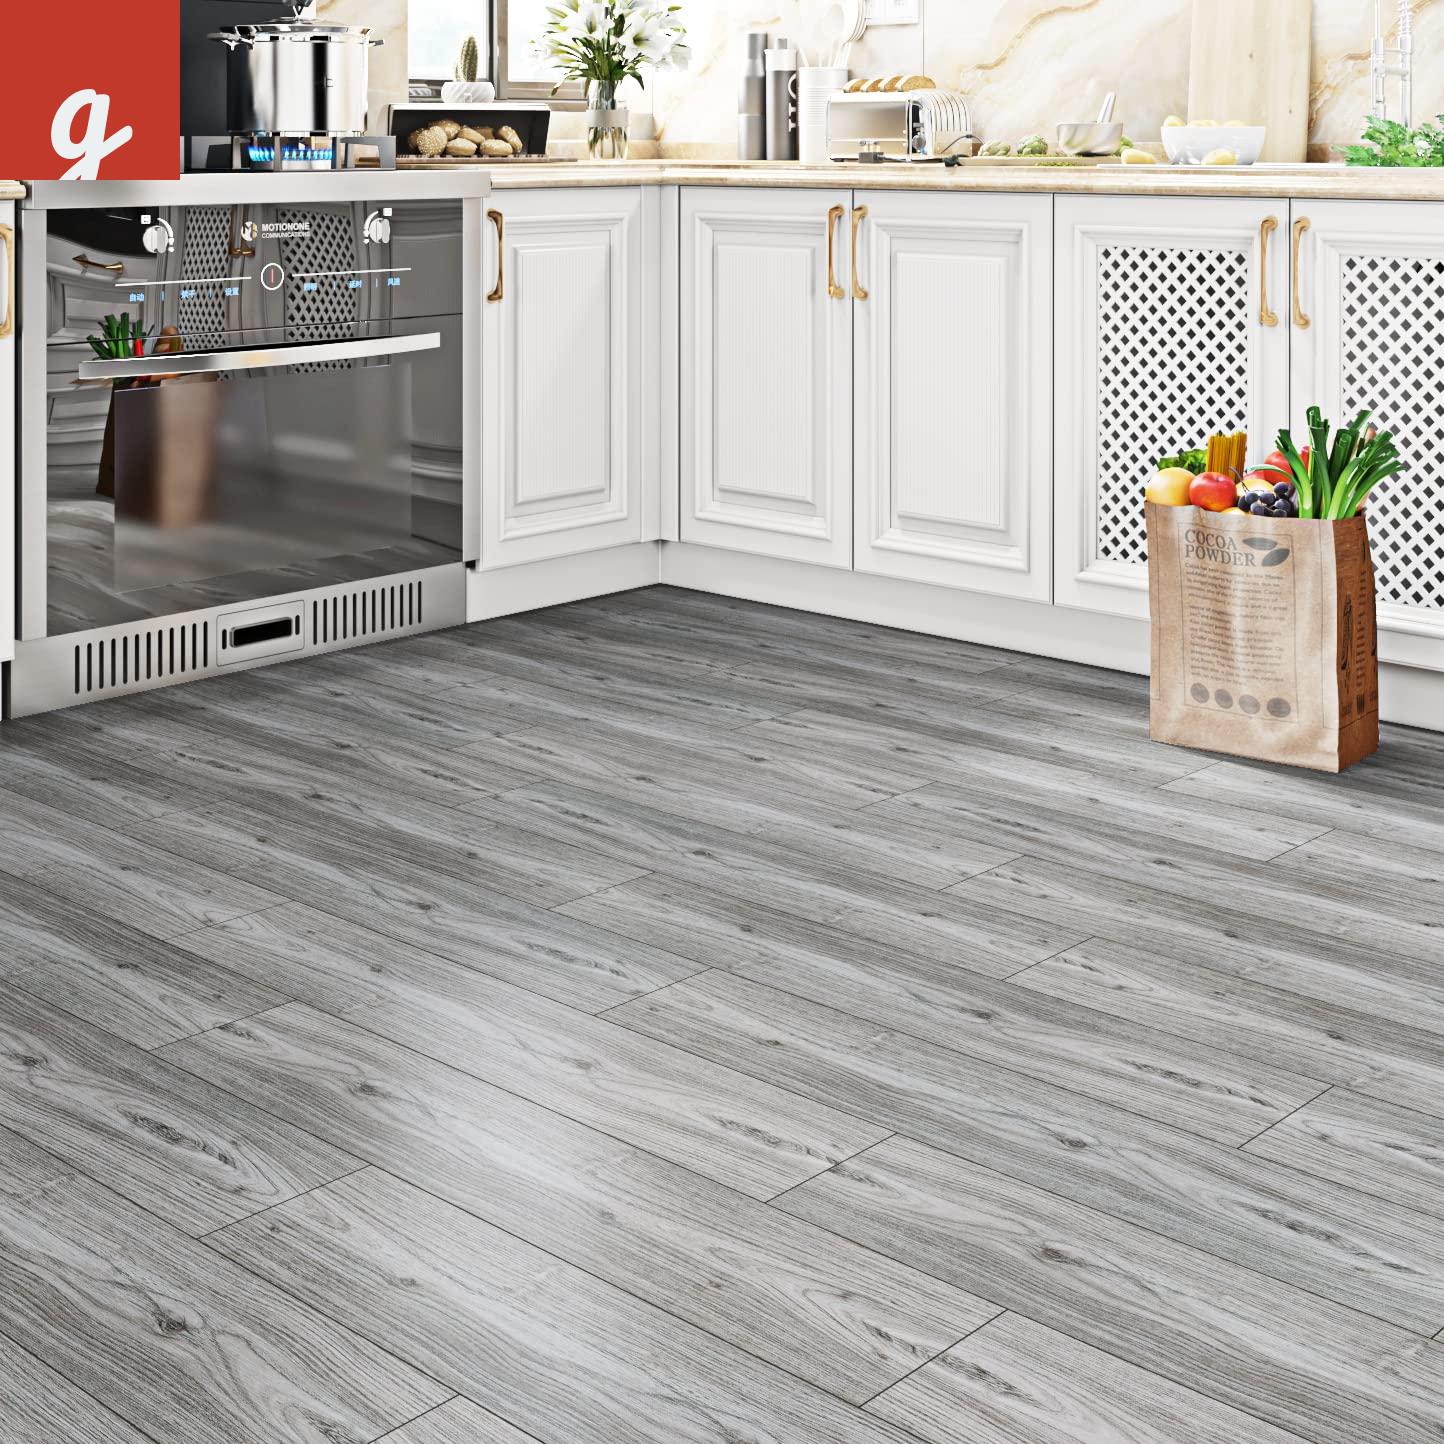 grey laminate wood floors